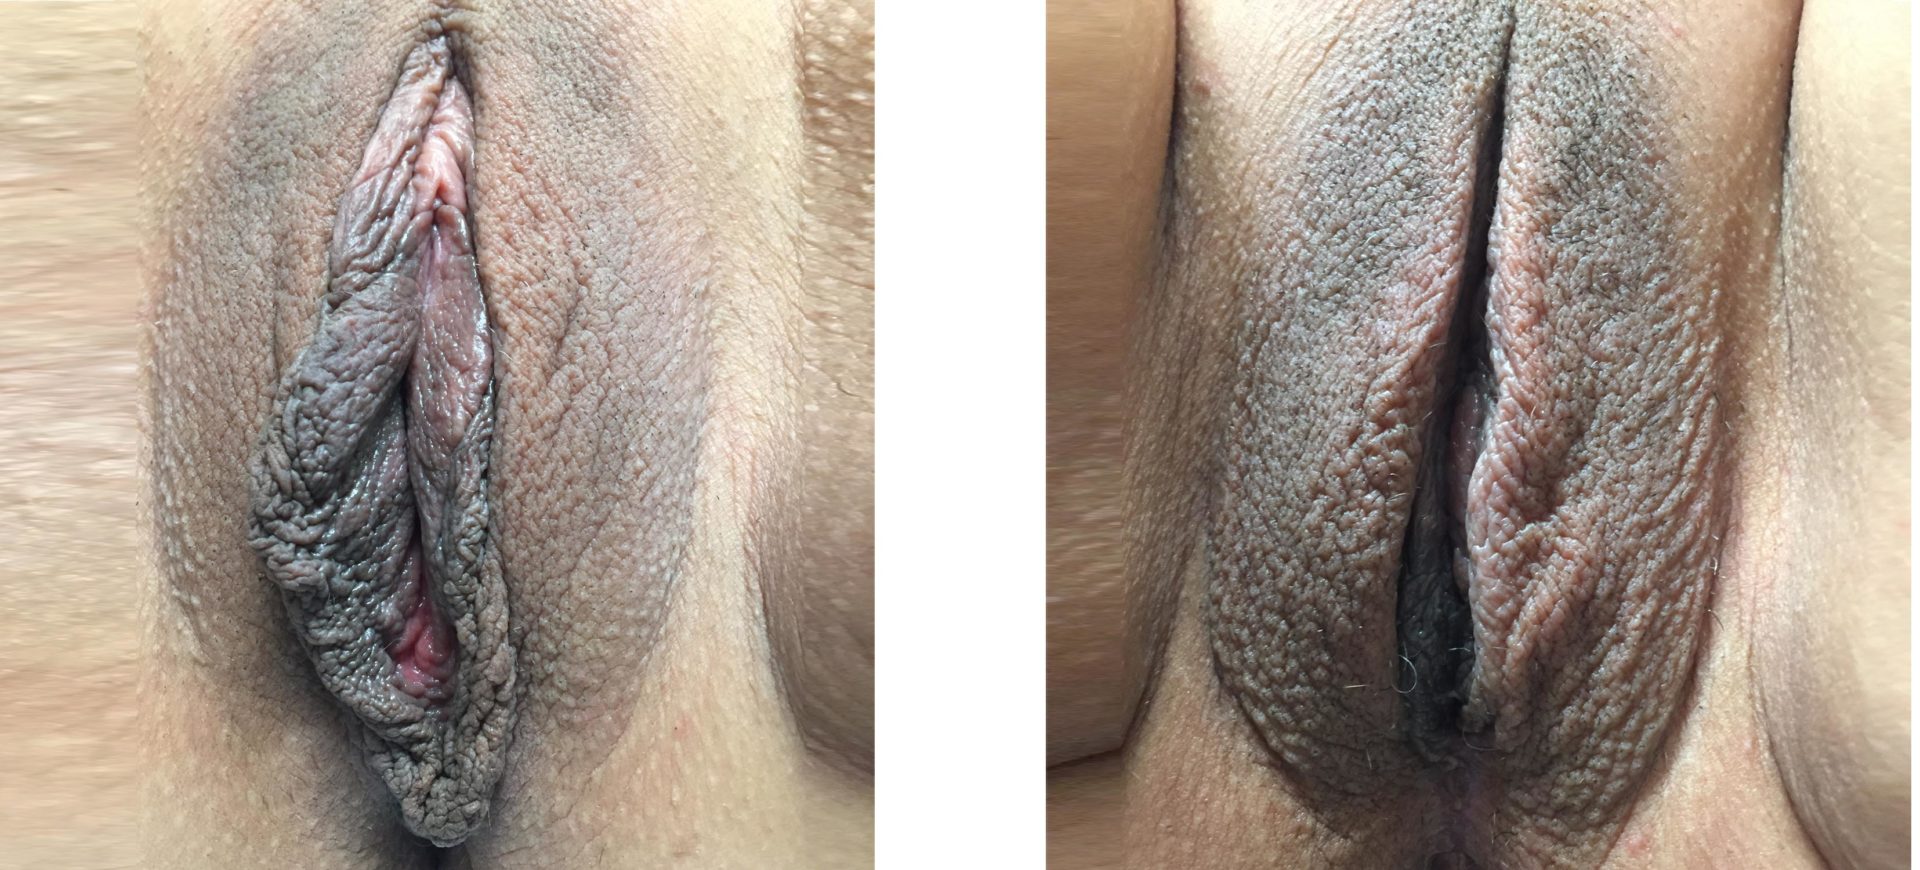 Vaginoplasty and Labiaplasty Minora